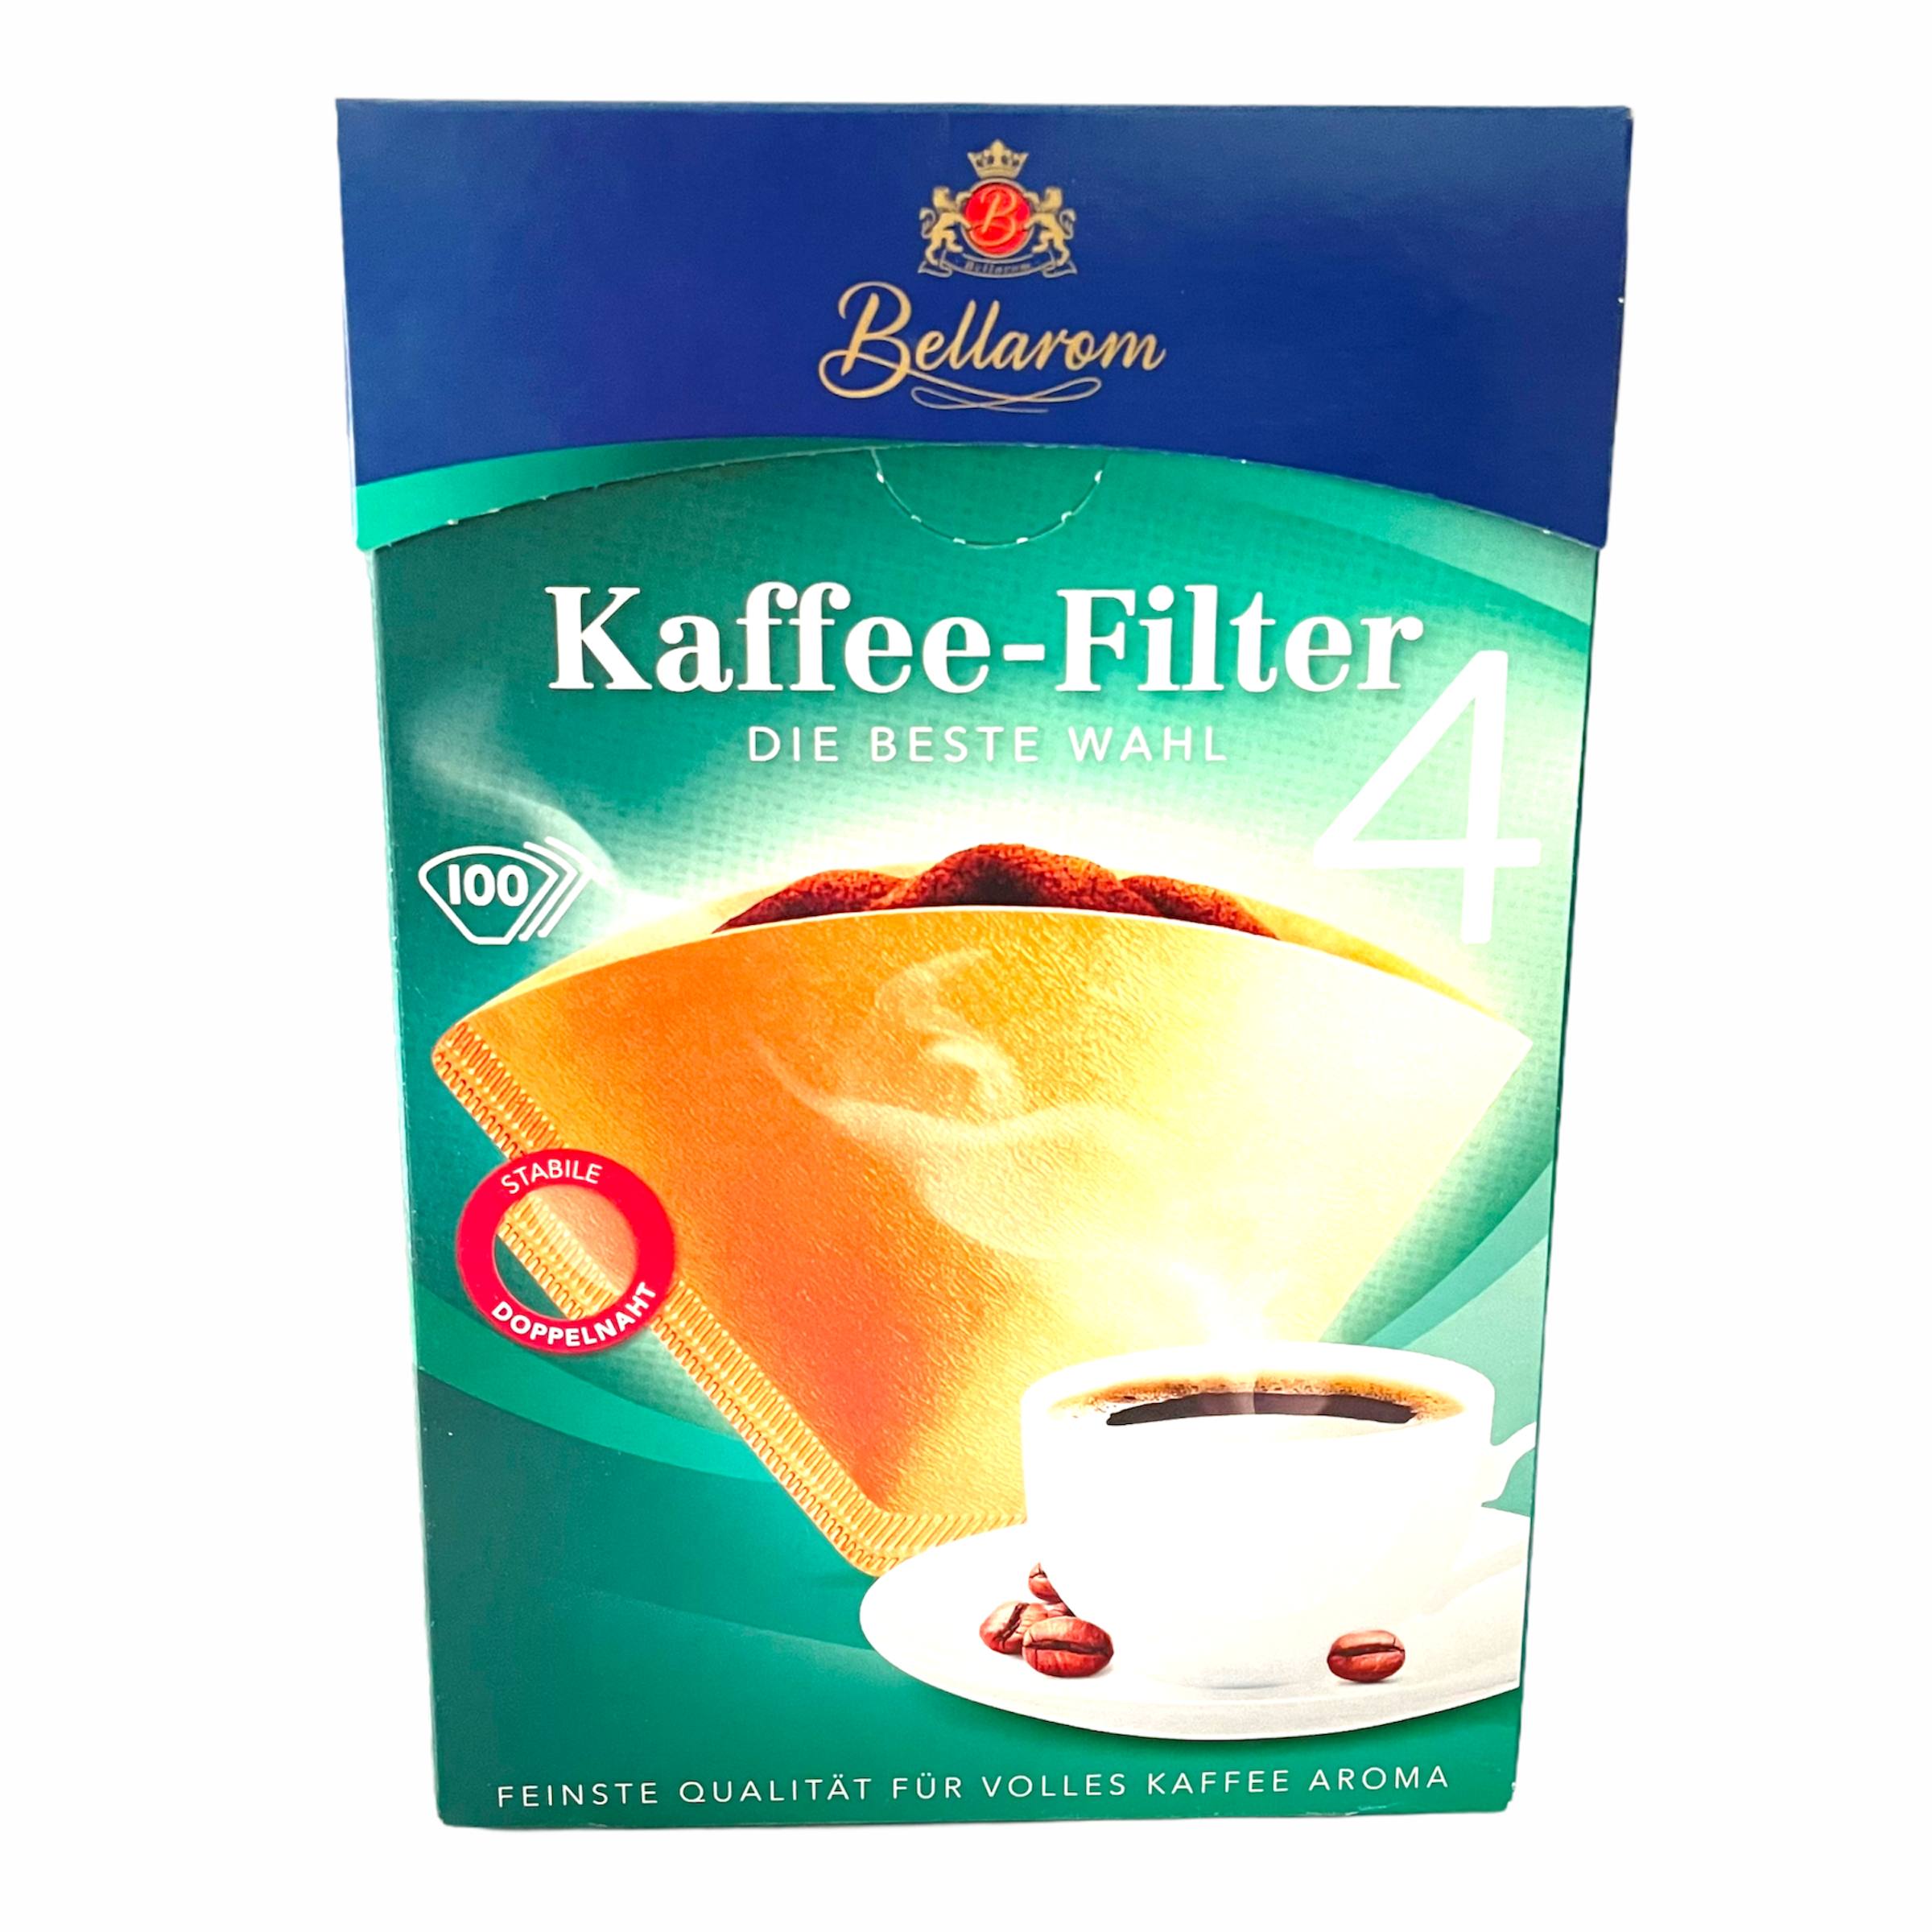 فیلتر قهوه مدل بلارم Bellarom بسته 100عددی